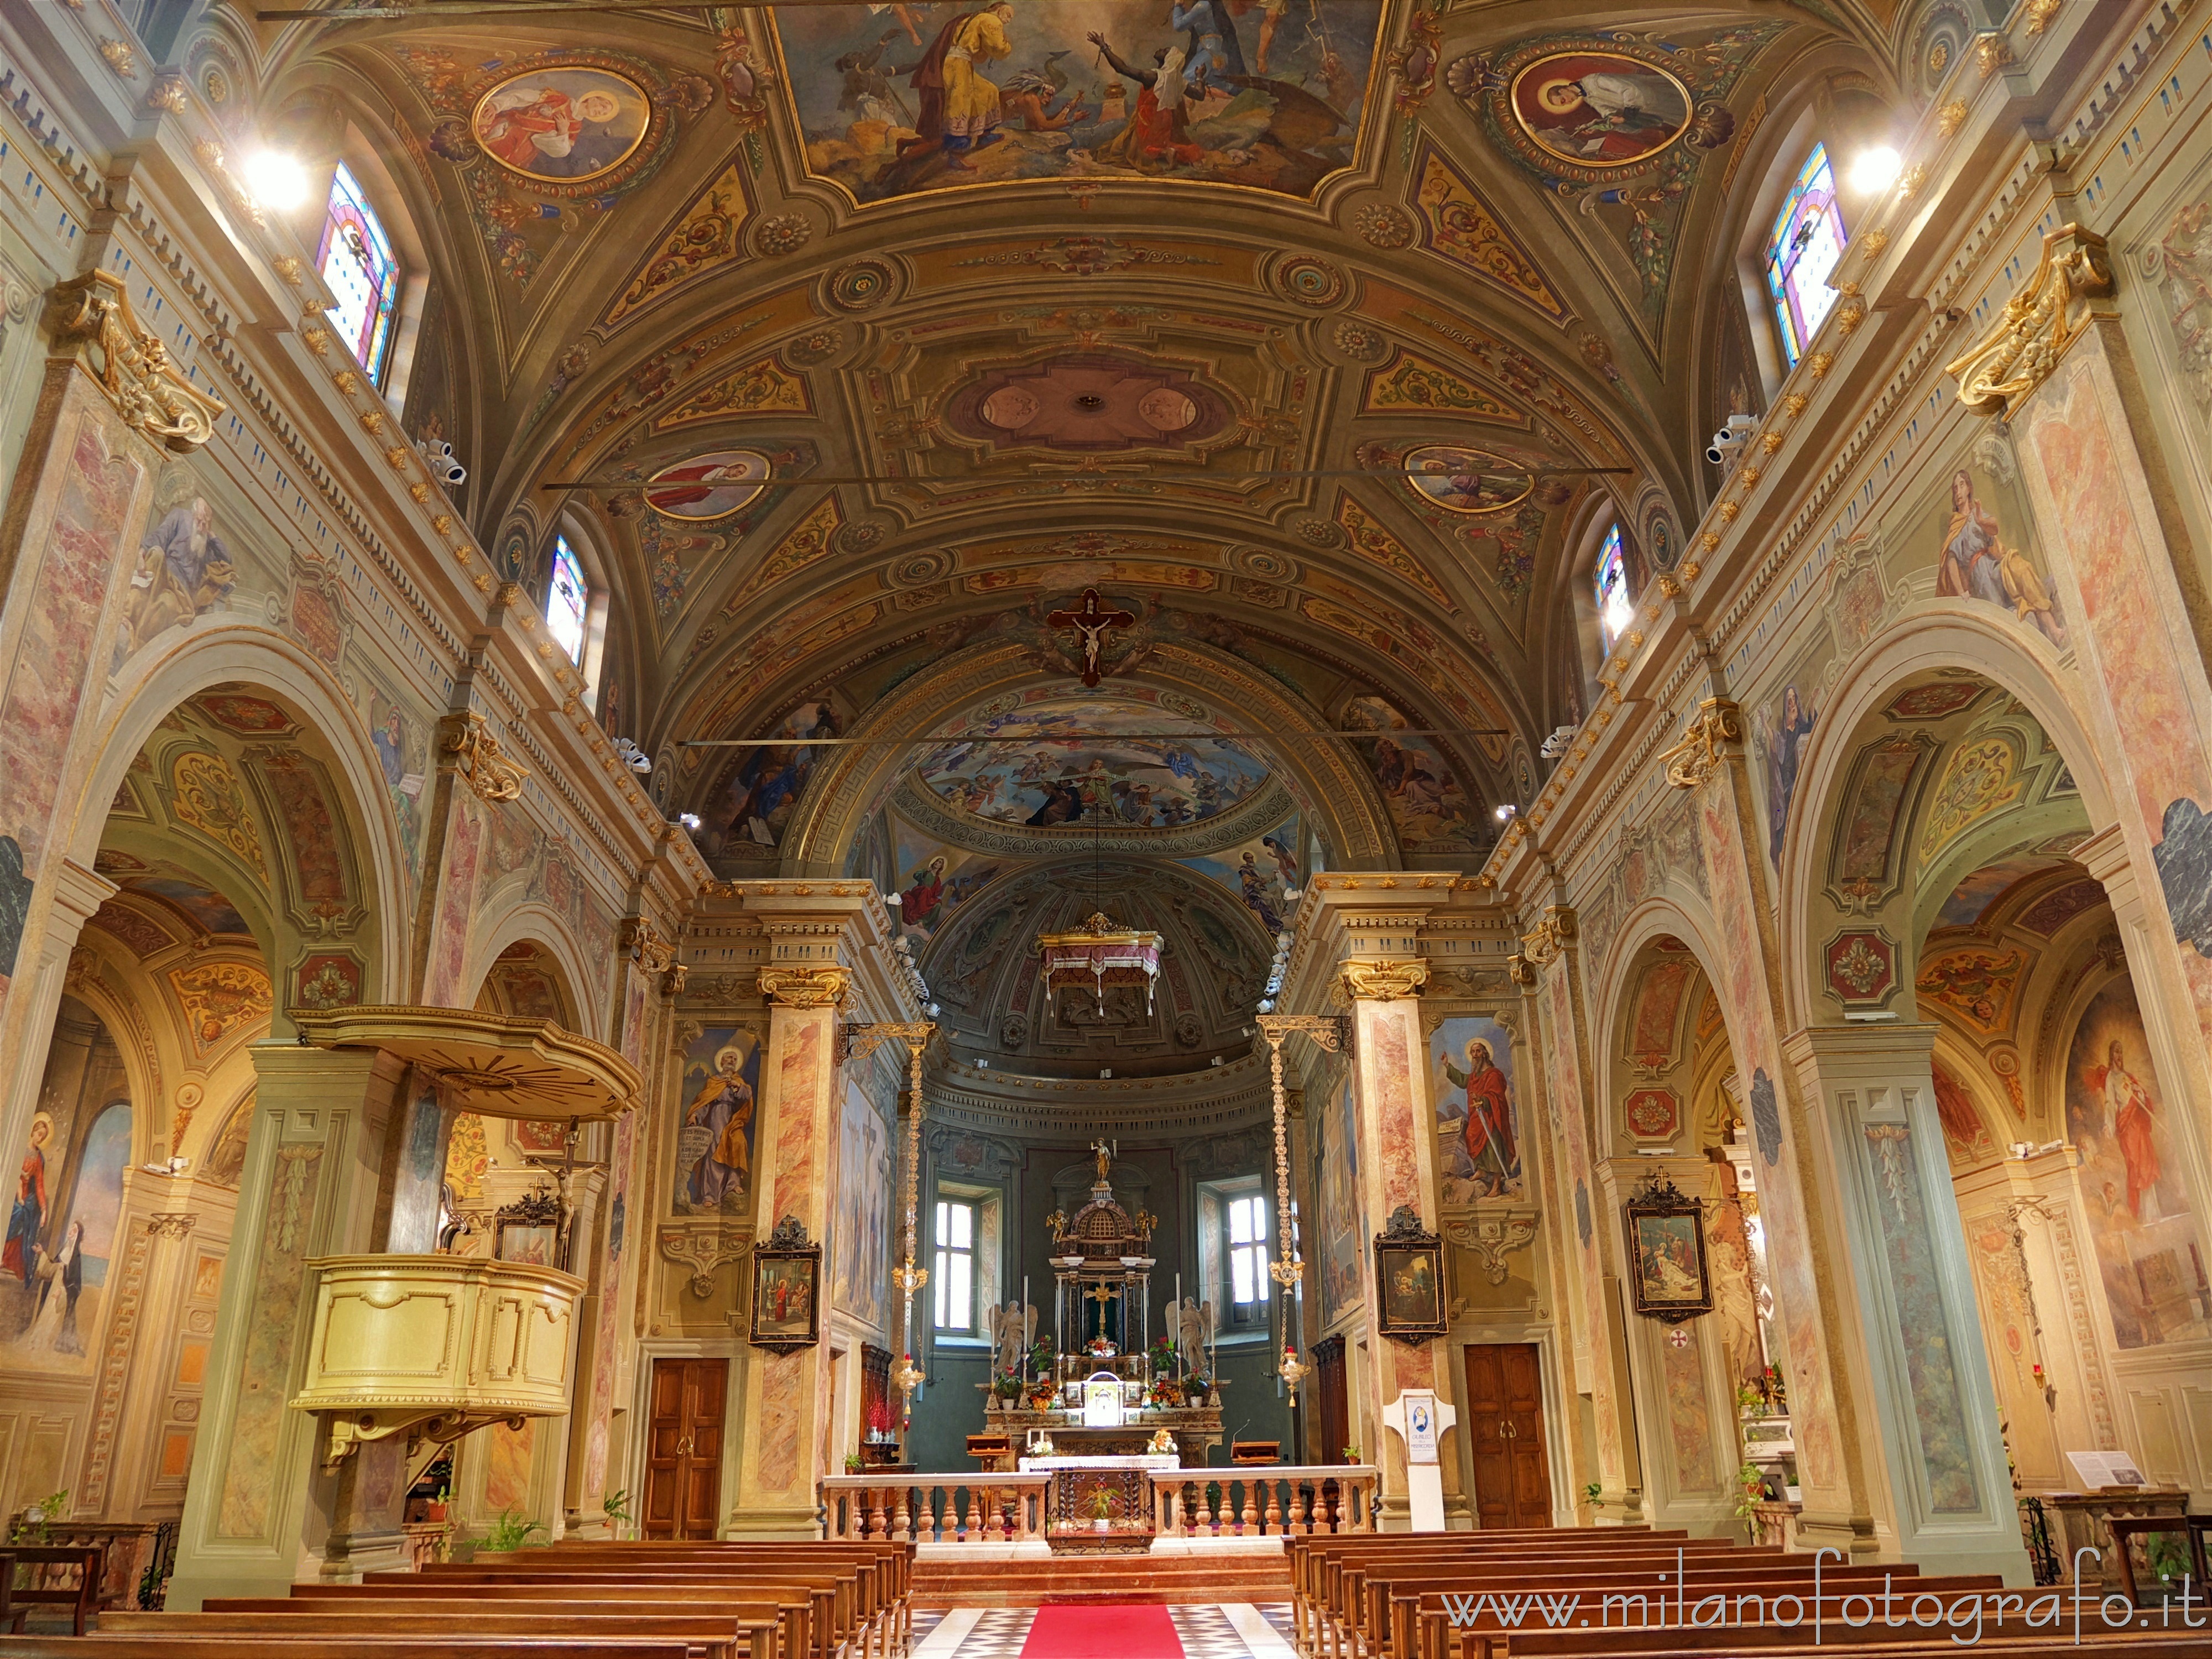 Meda (Monza e Brianza, Italy): Interior of the Sanctuary of the Holy Crucifix - Meda (Monza e Brianza, Italy)